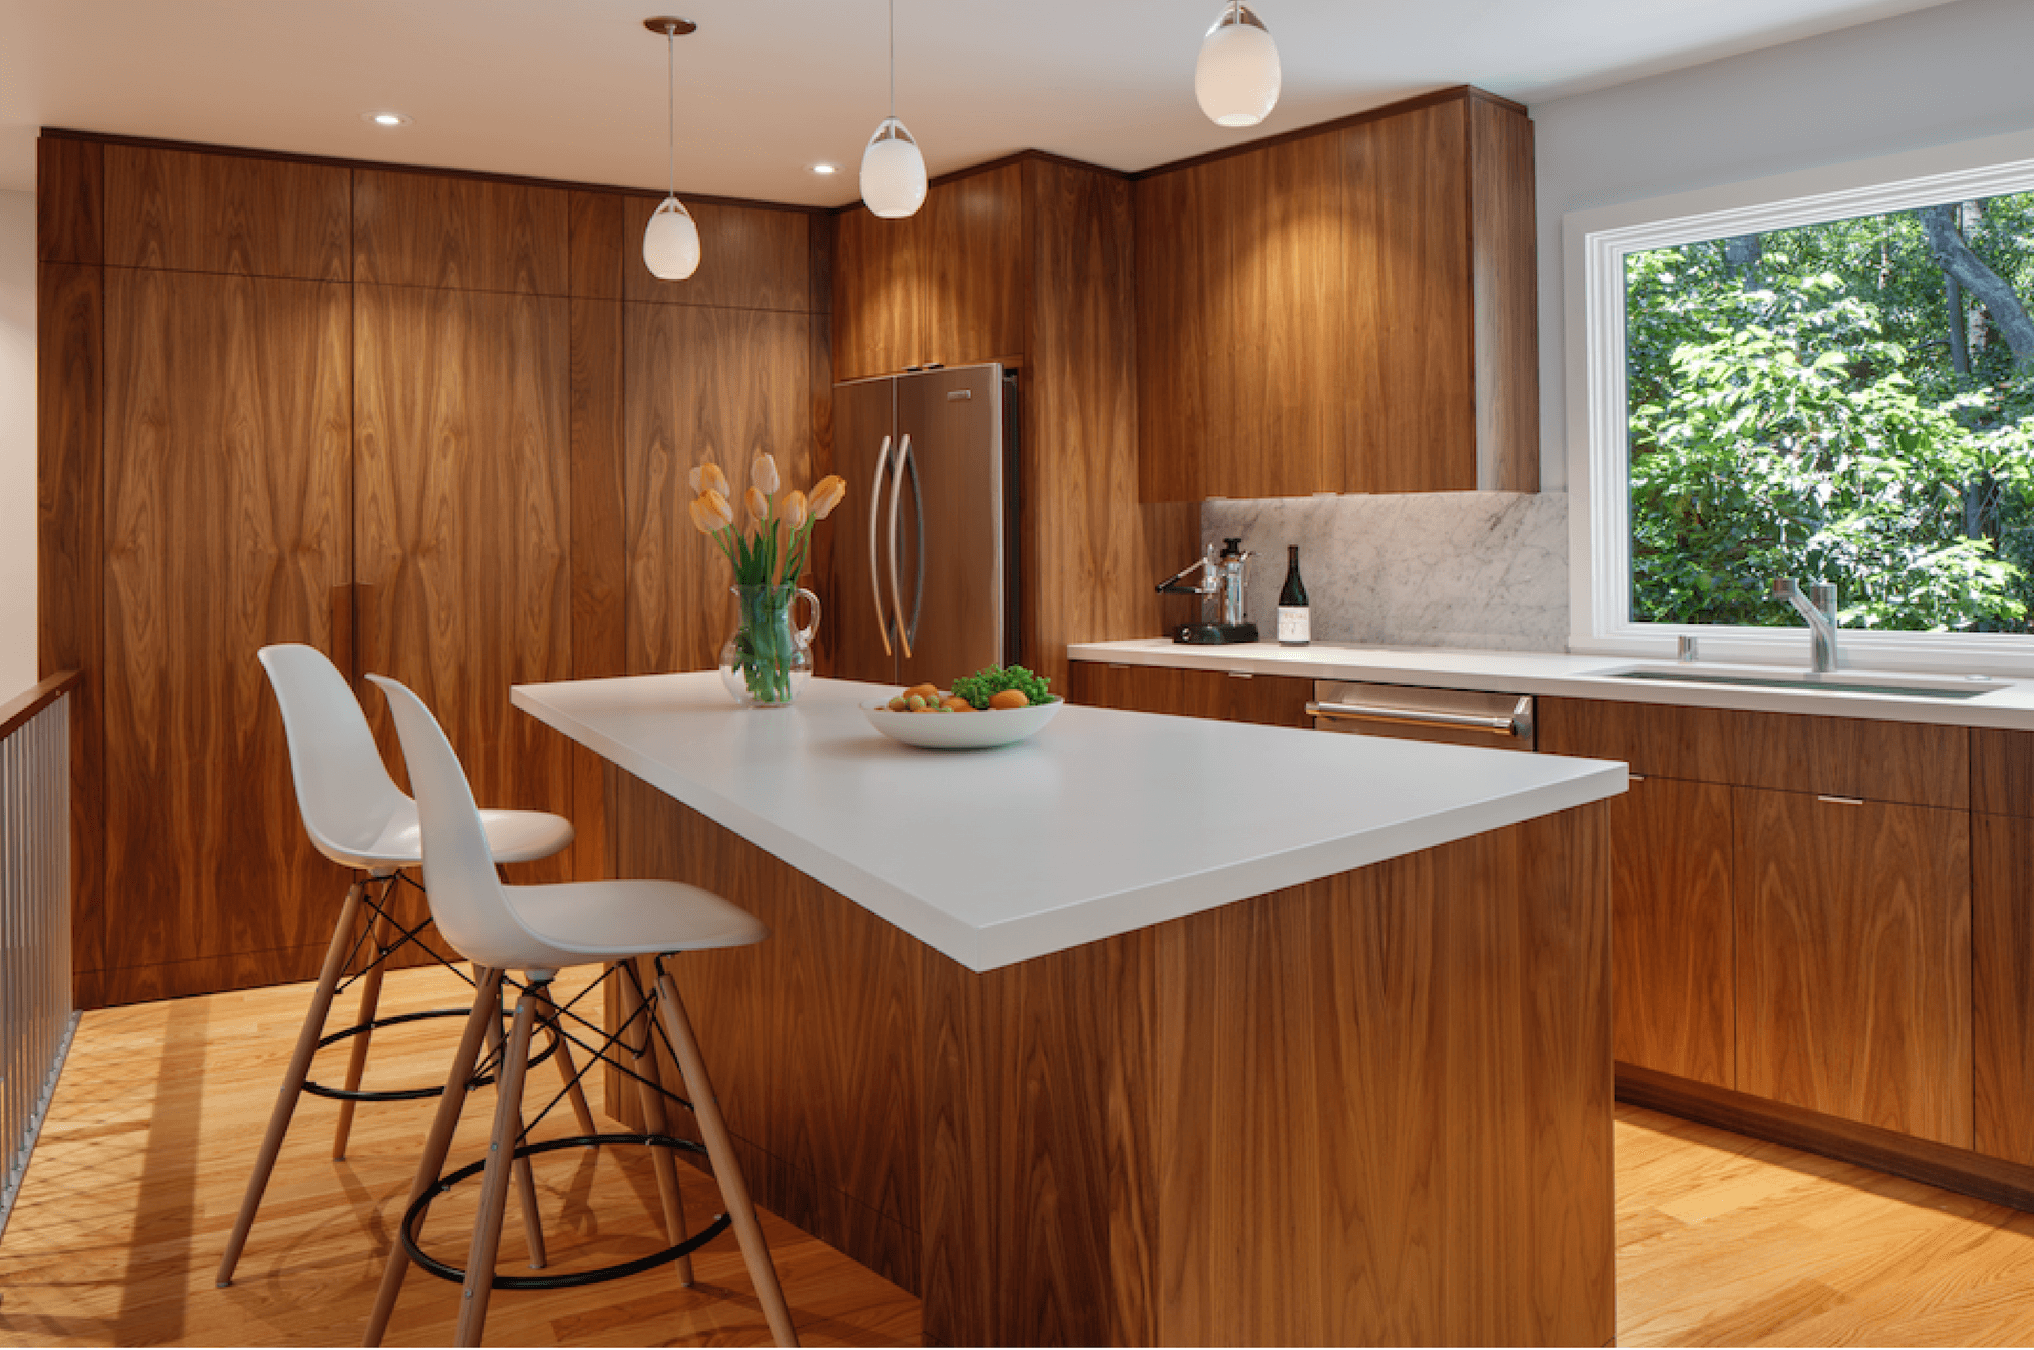 modern mid century kitchens kitchen wood marvelous remodel